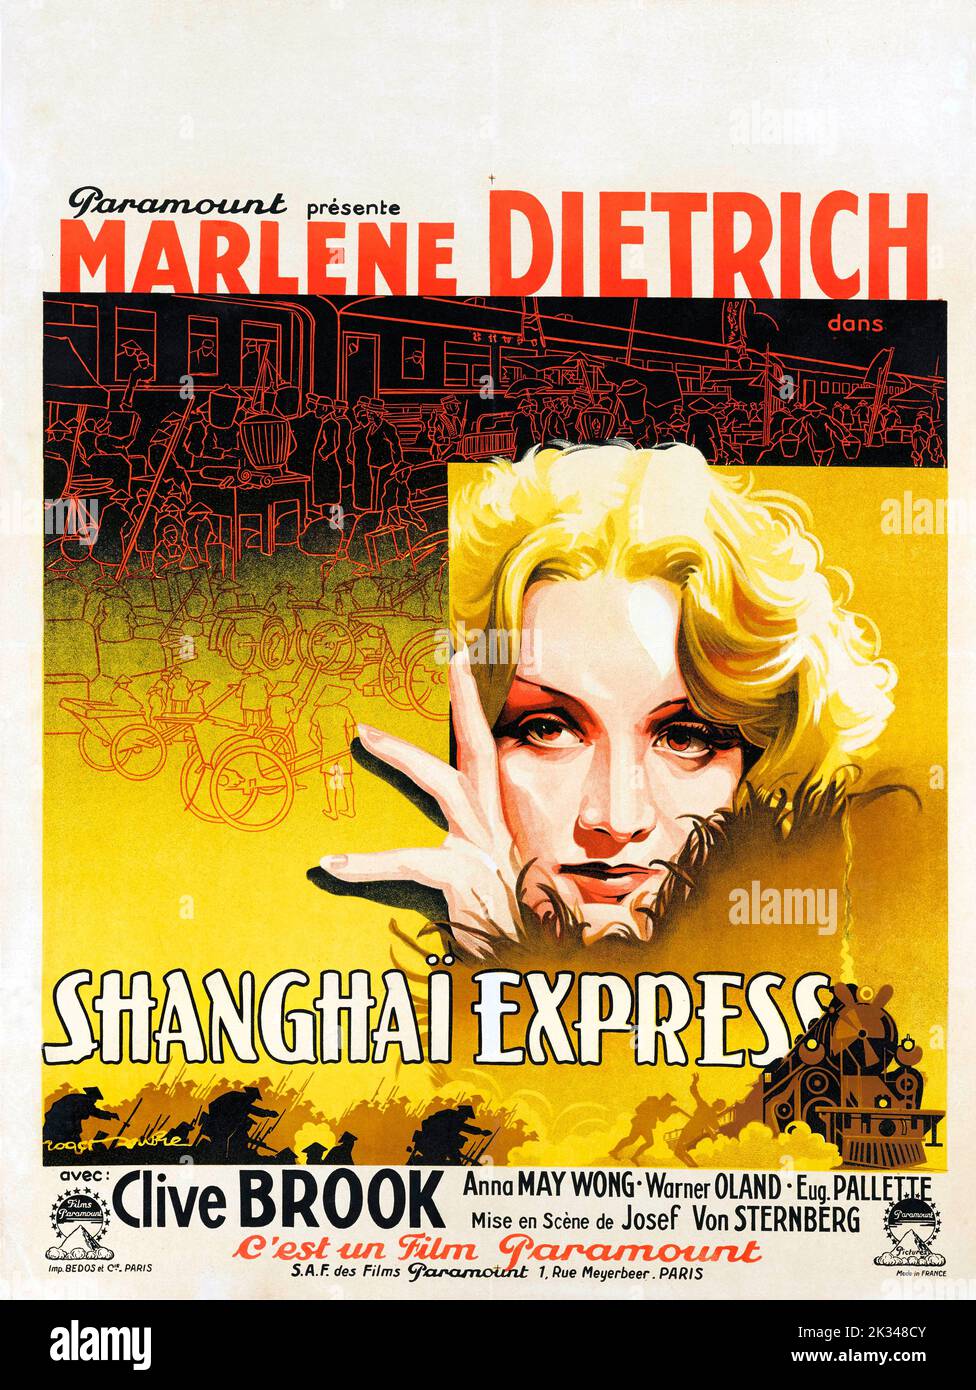 Vintage 1930s Film Poster - SHANGHAI EXPRESS, Marlene Dietrich, 1932 Stock Photo